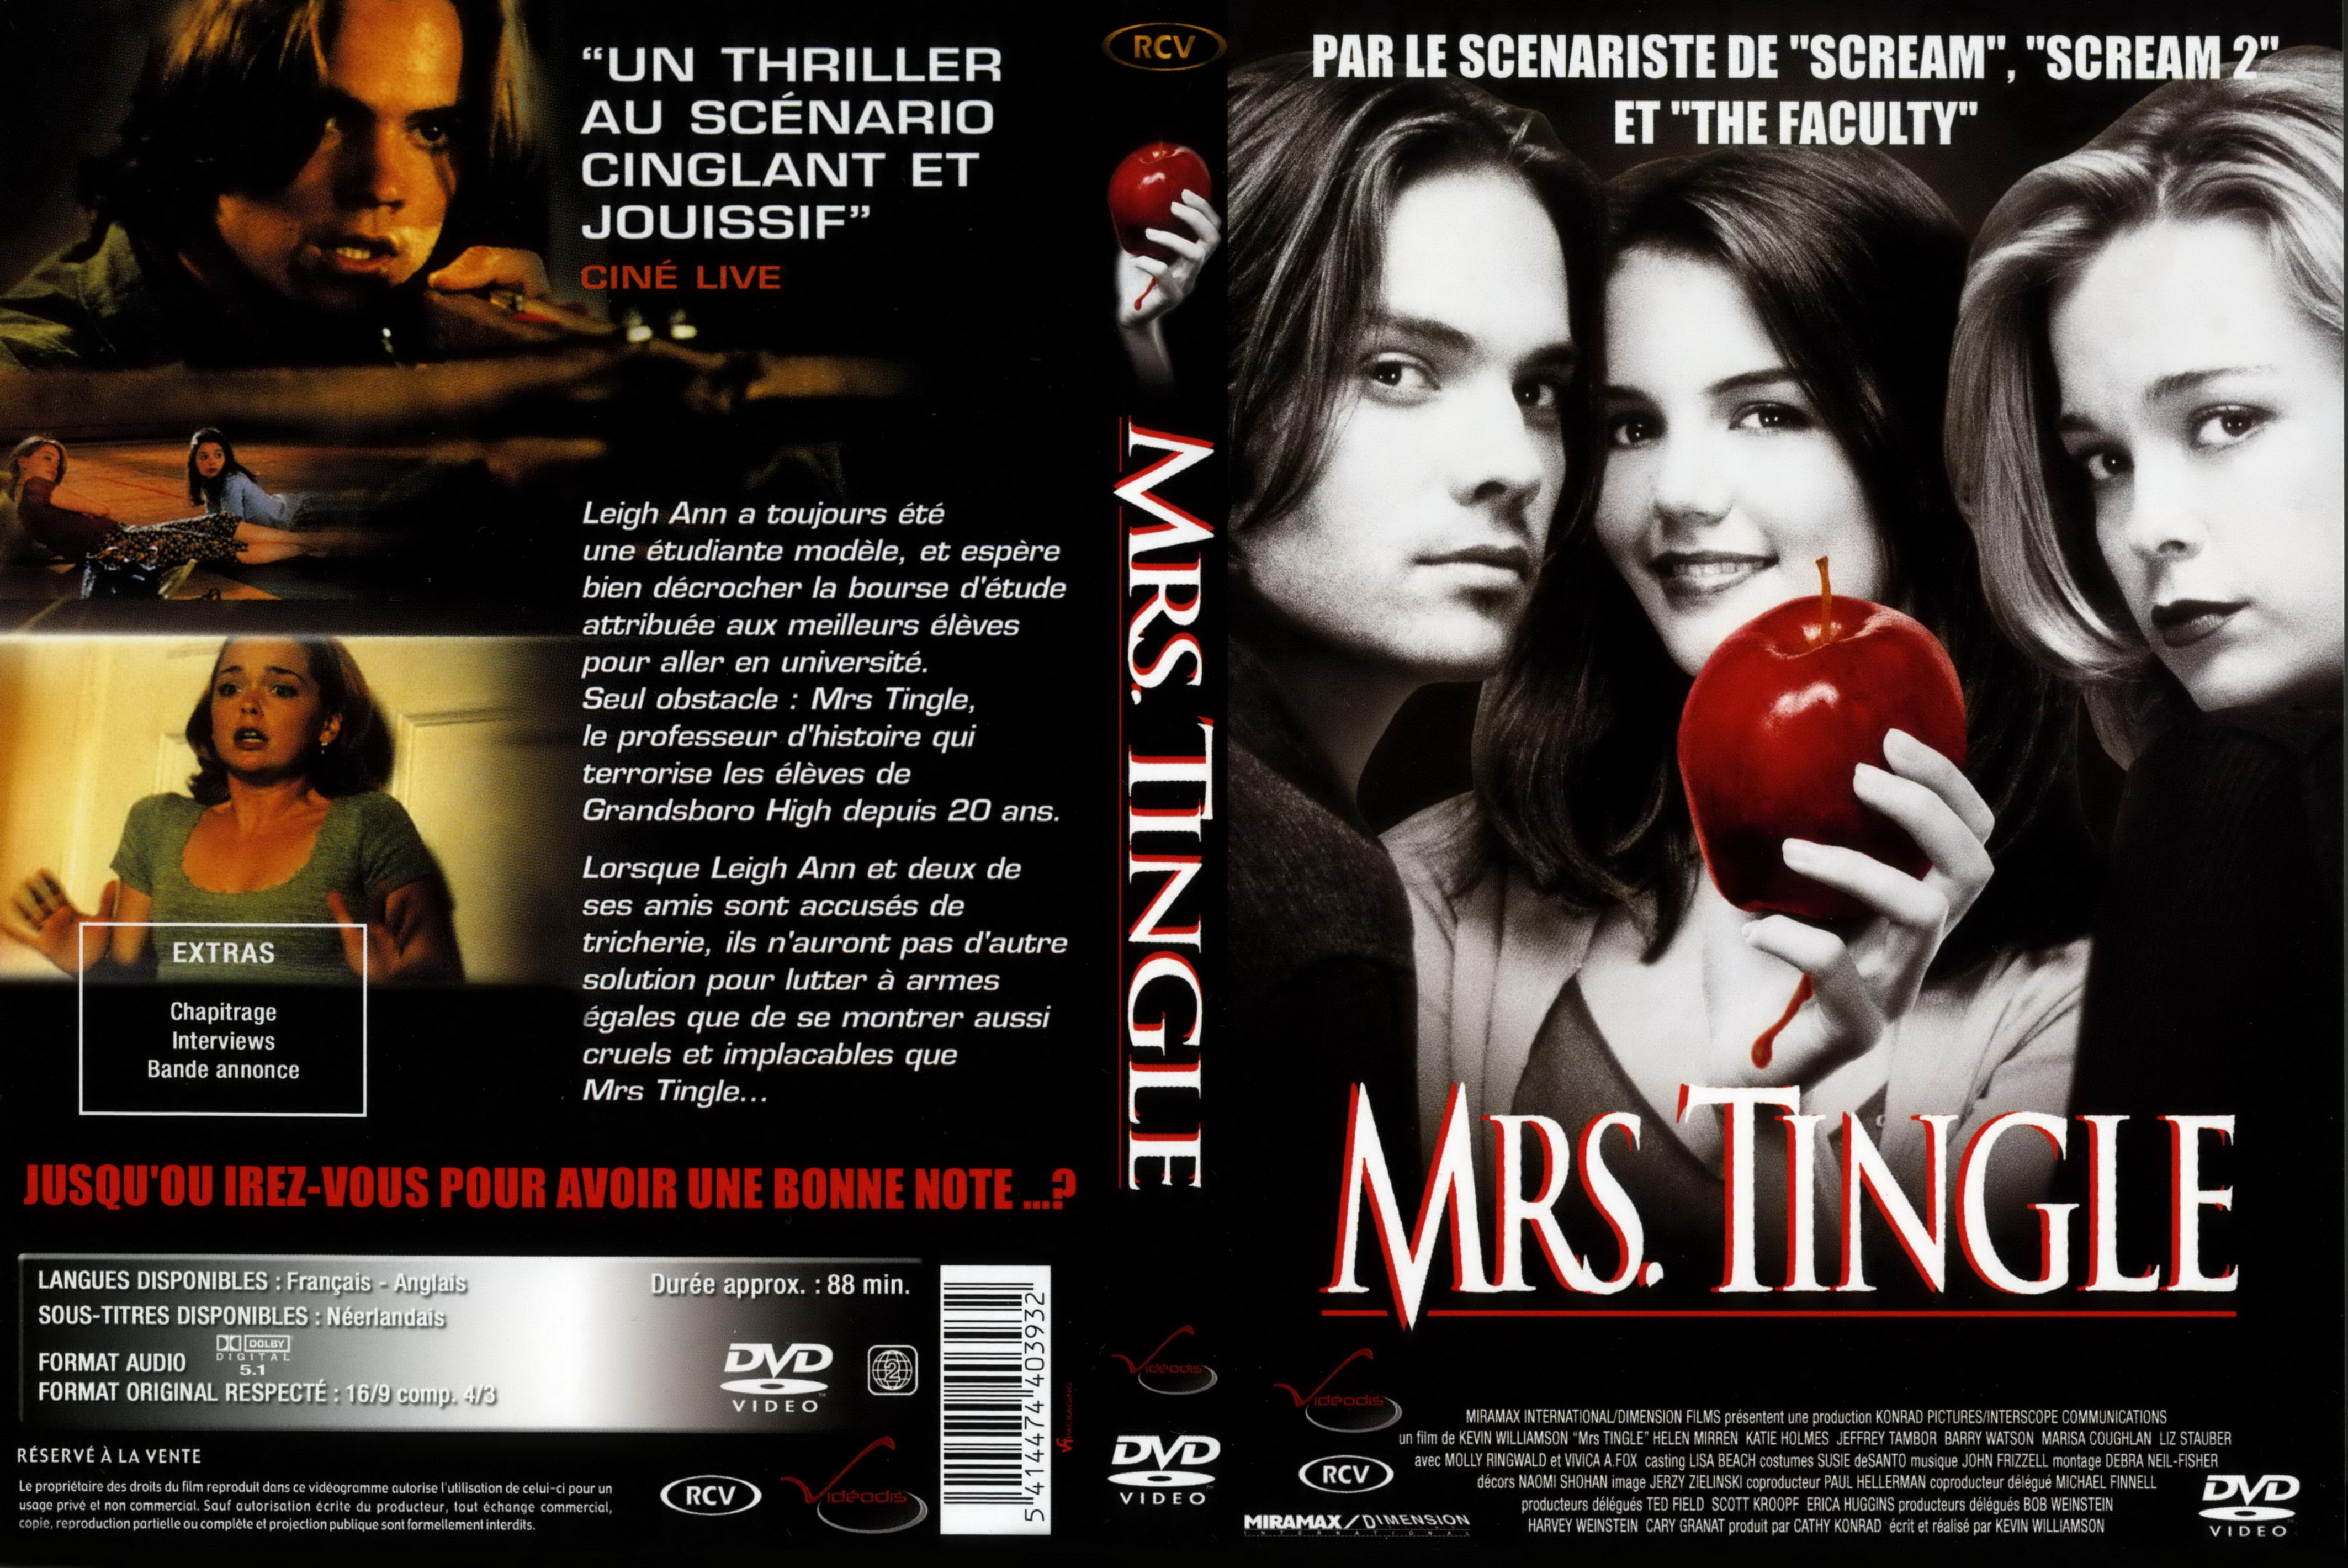 Jaquette DVD Mrs Tingle v3